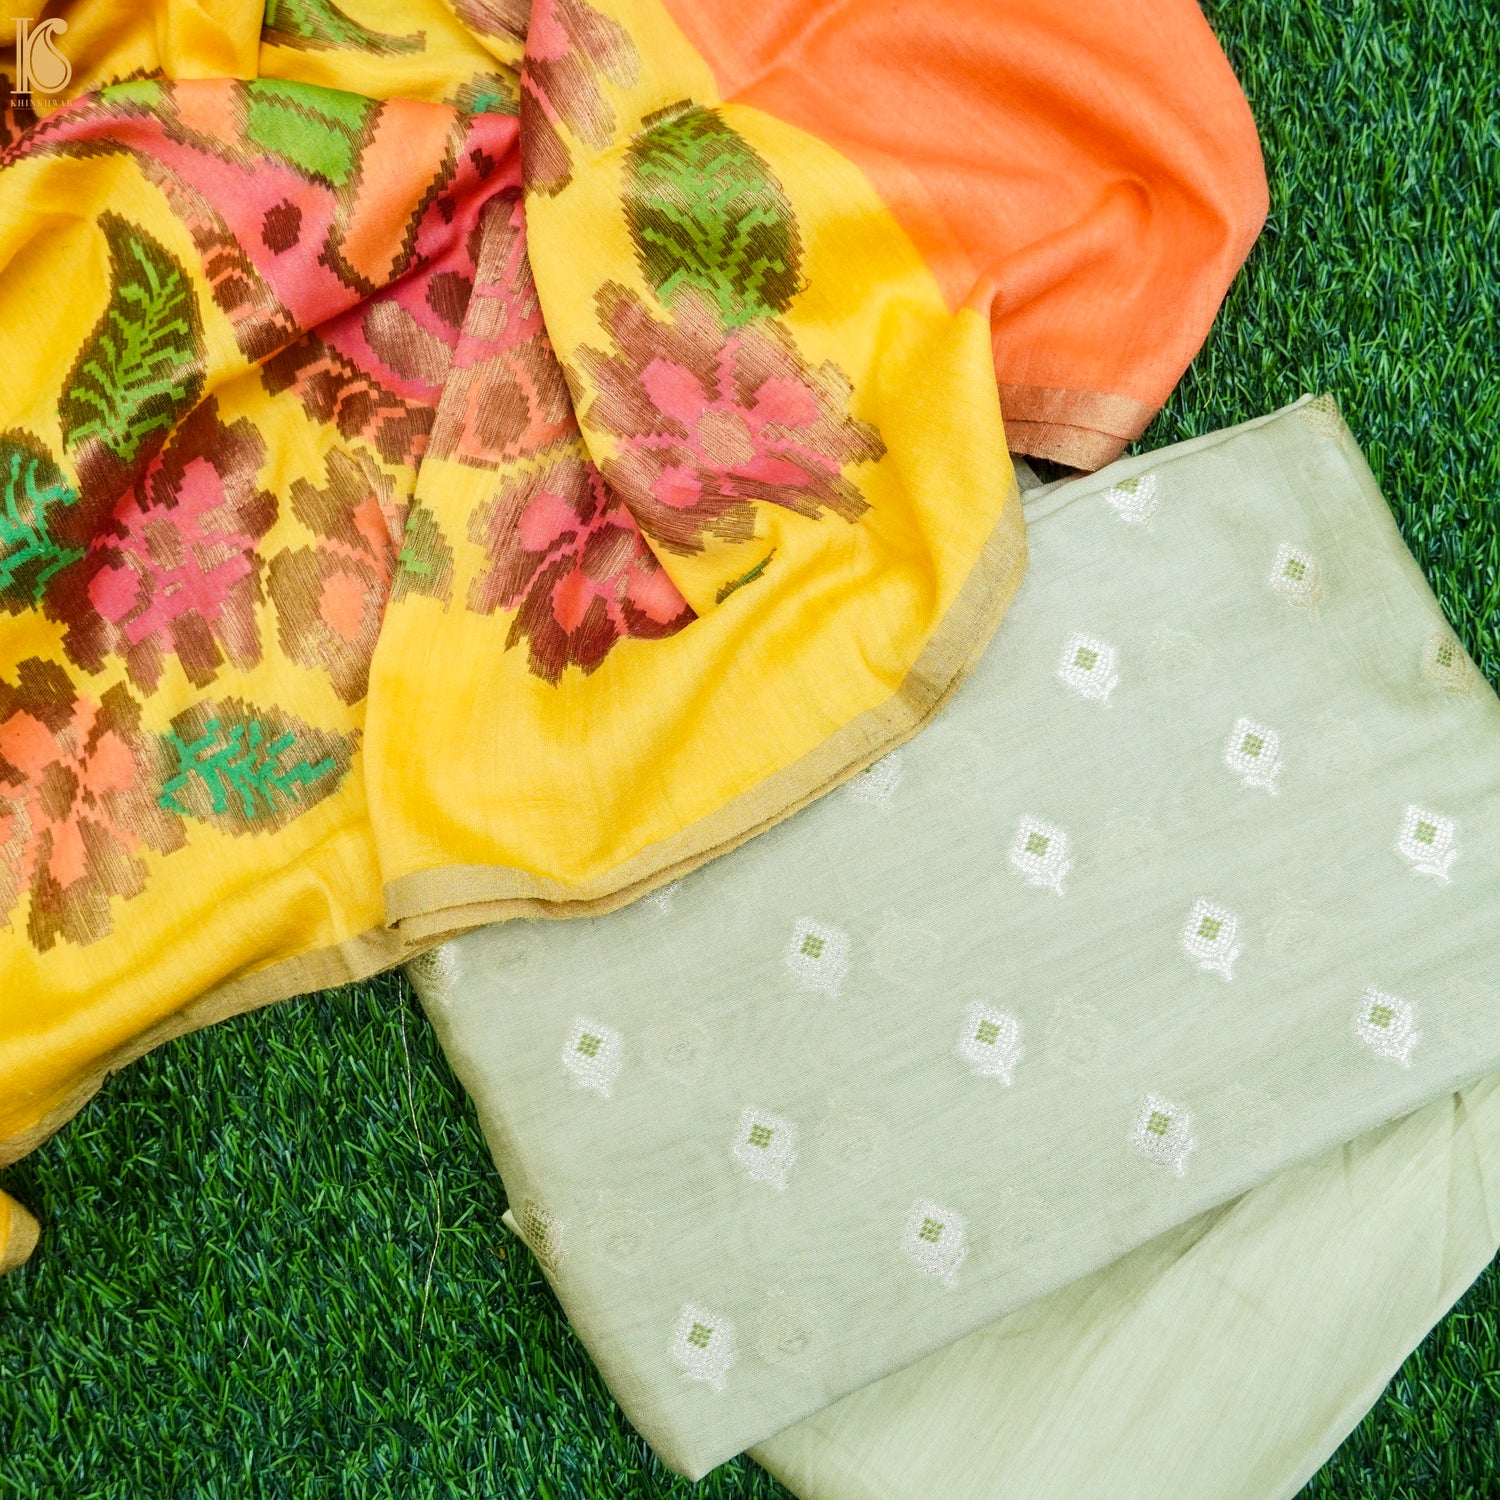 Ottoman Green Pure Silk by Spun Silk Handloom Banarasi Suit Set with Dupatta - Khinkhwab